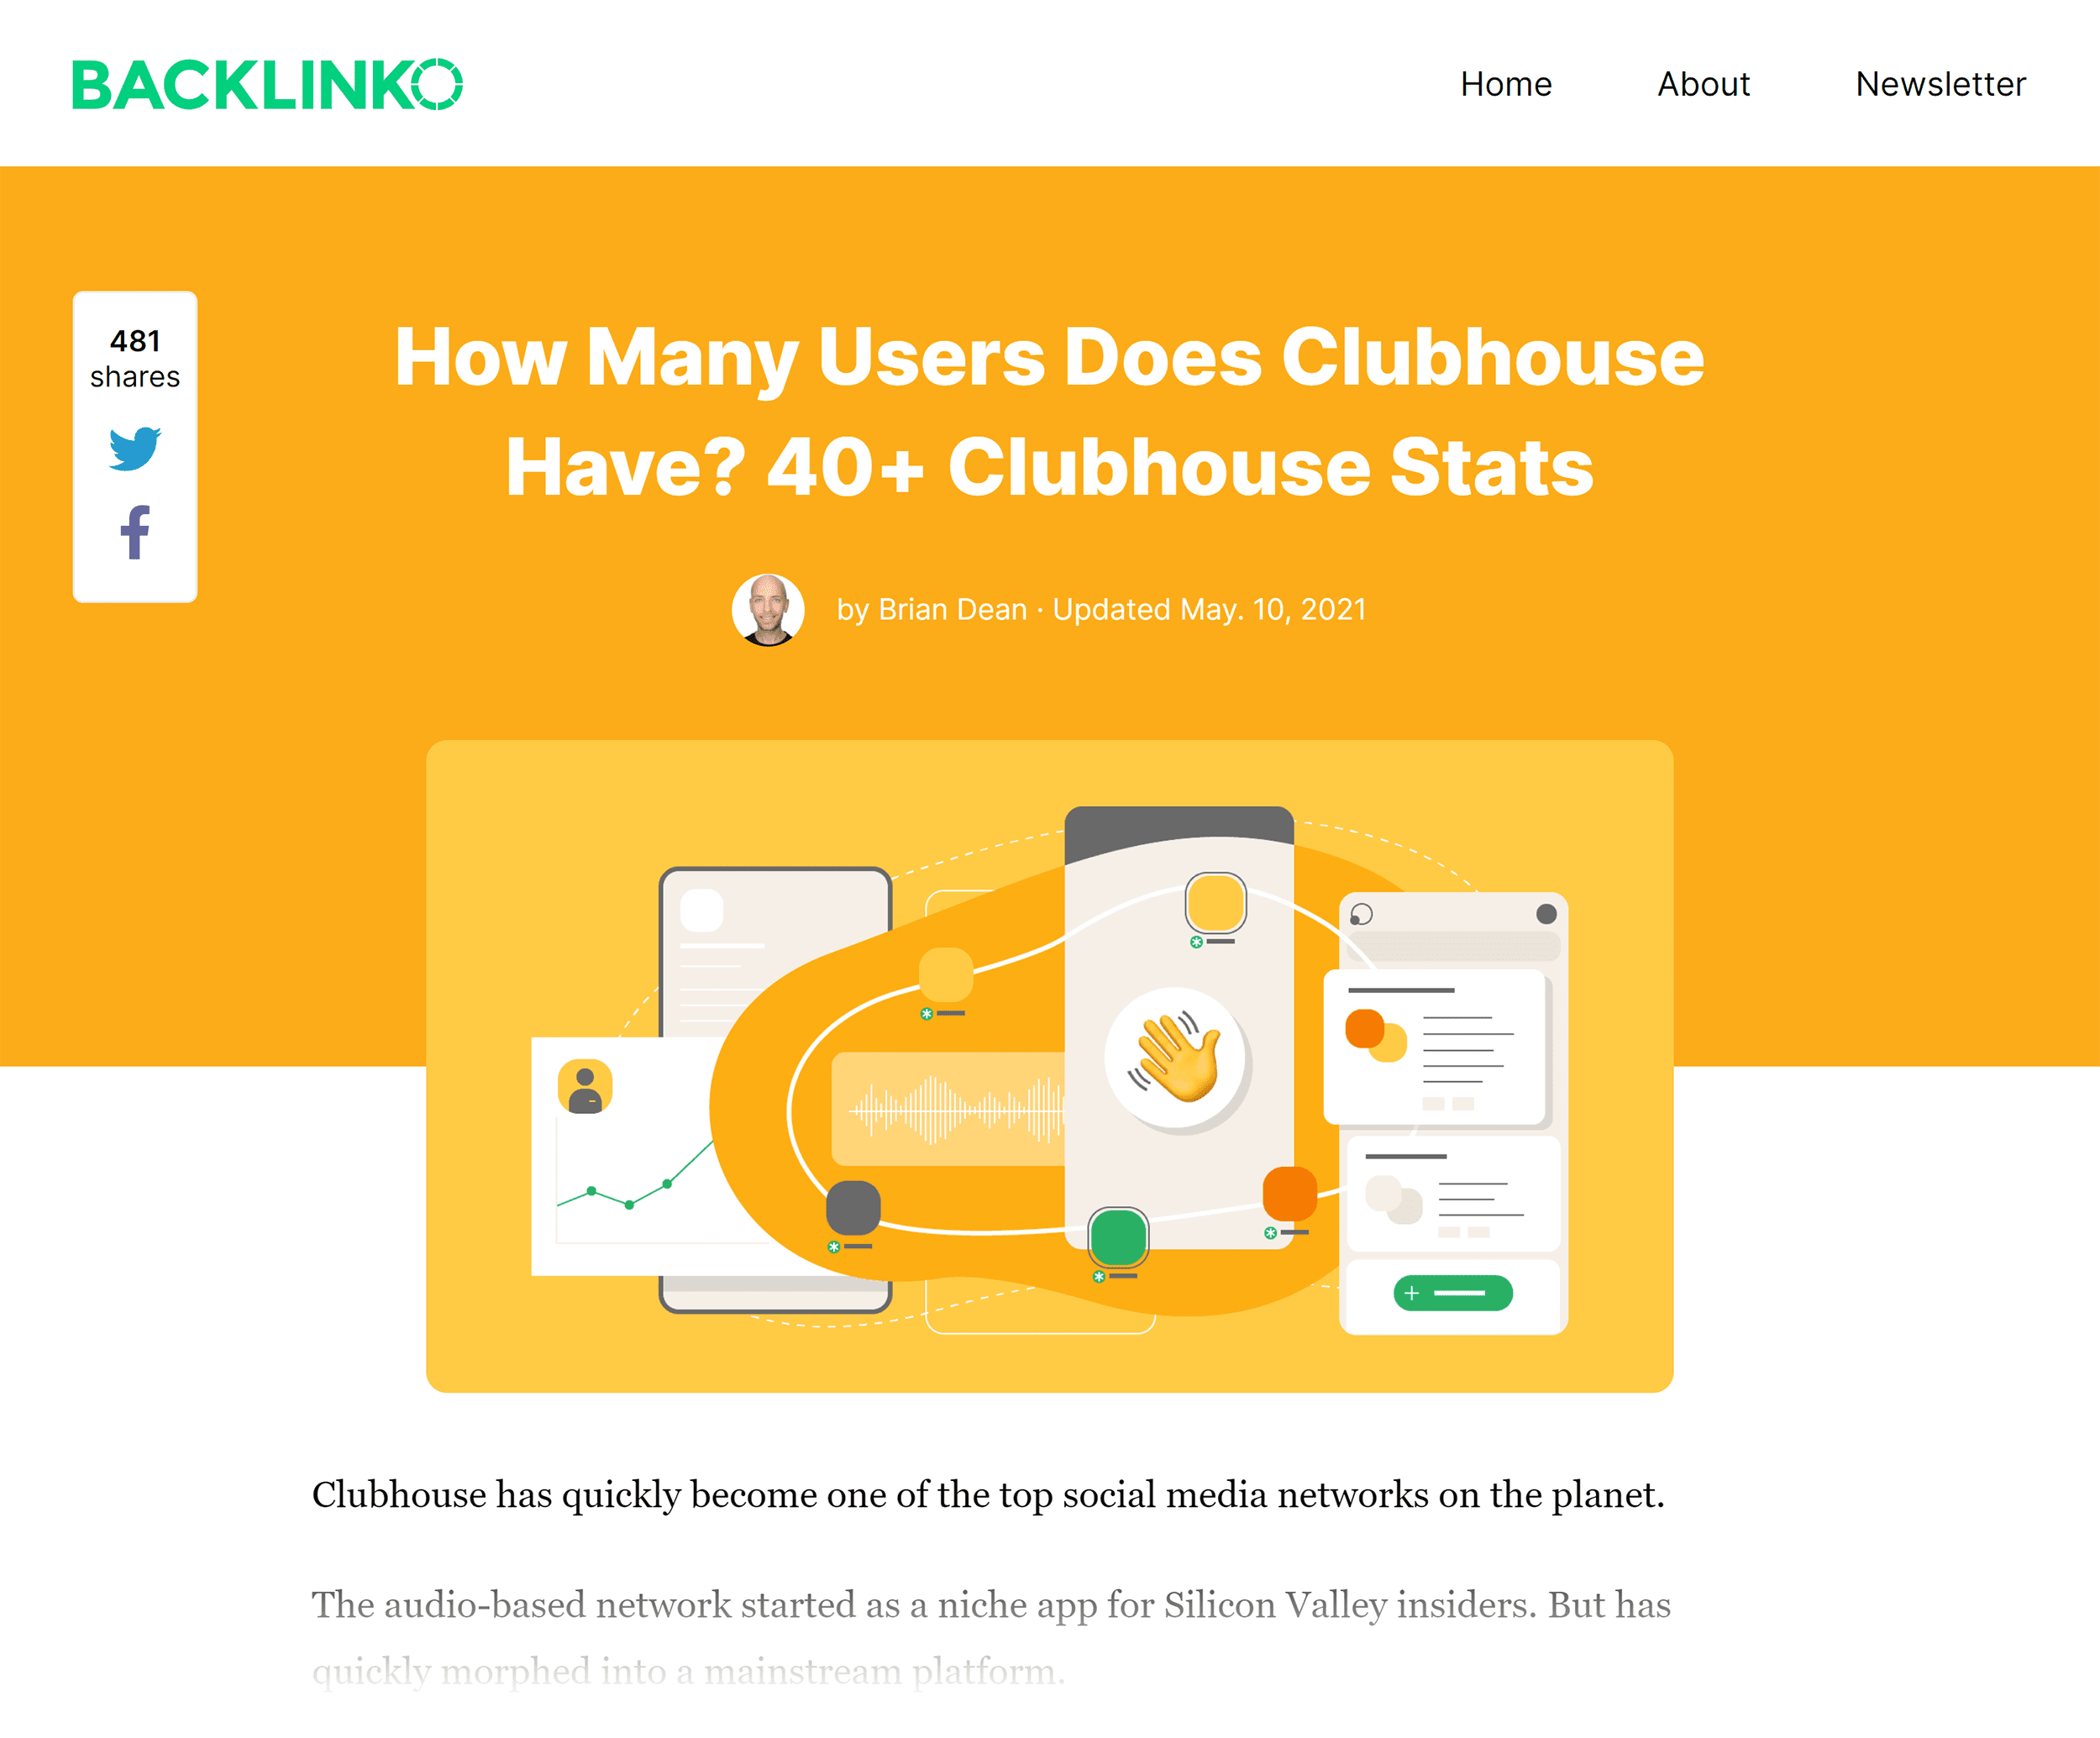 Backlinko – Clubhouse users